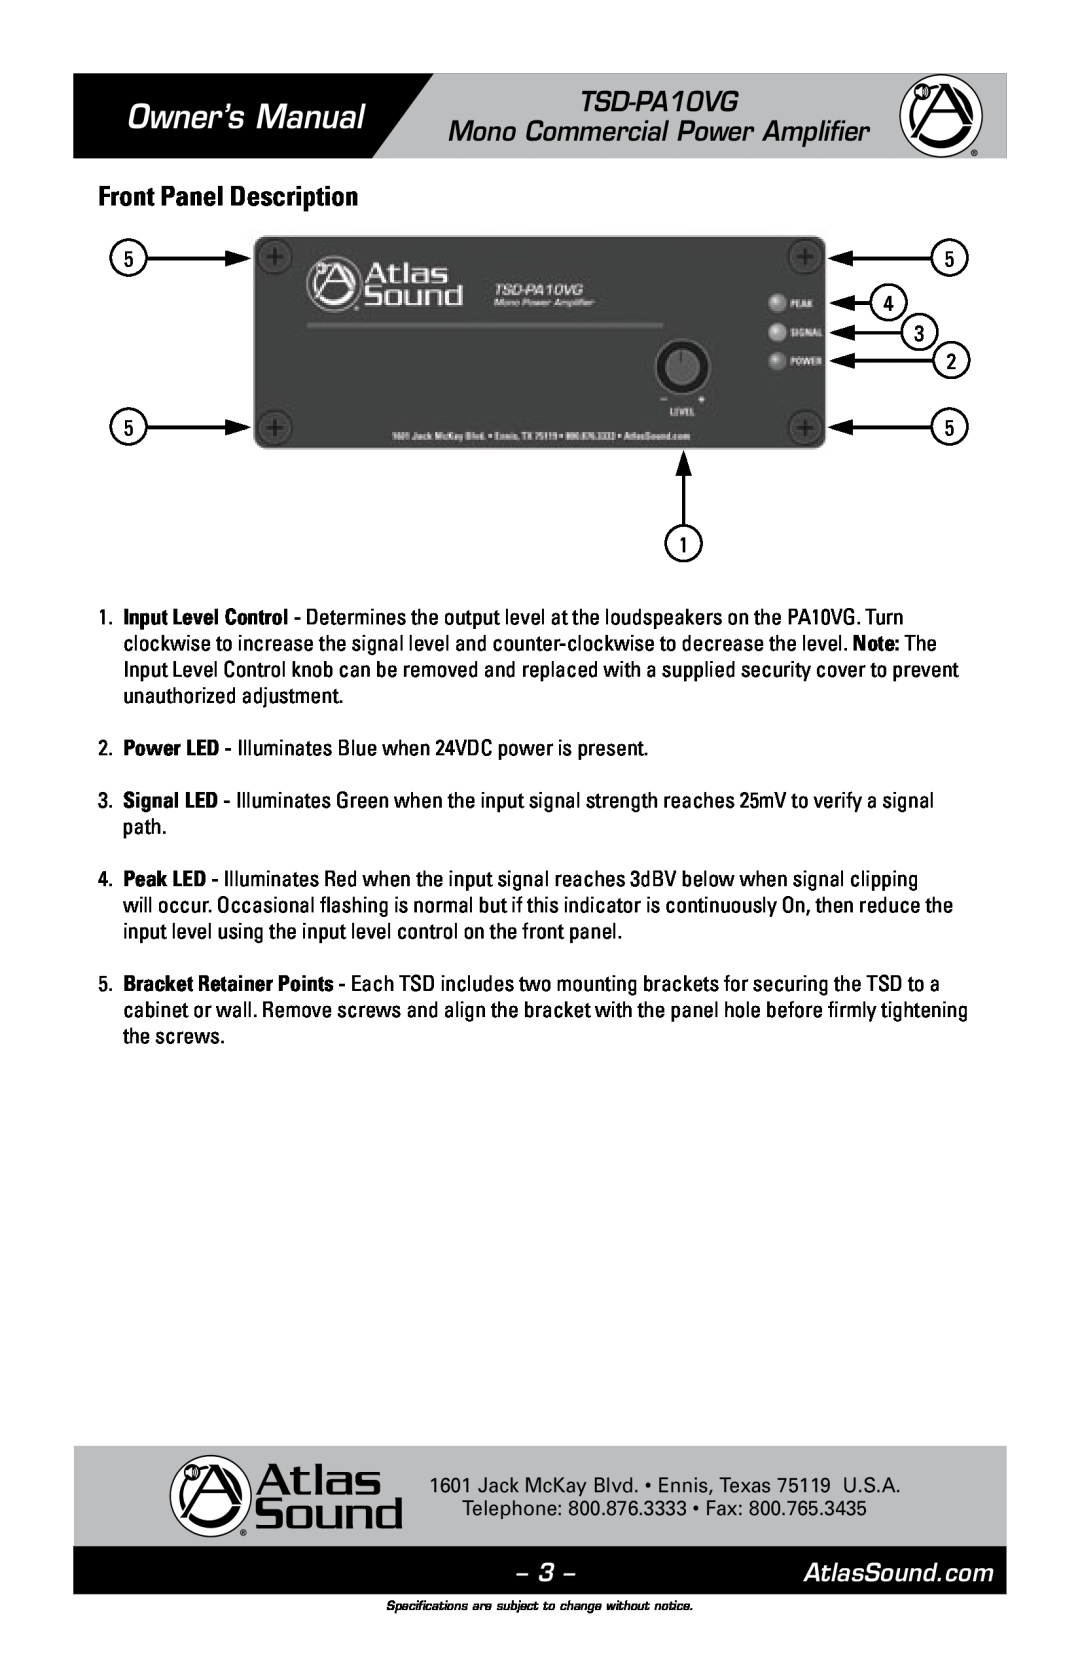 Atlas Sound owner manual Front Panel Description, TSD-PA10VG Mono Commercial Power Amplifier 